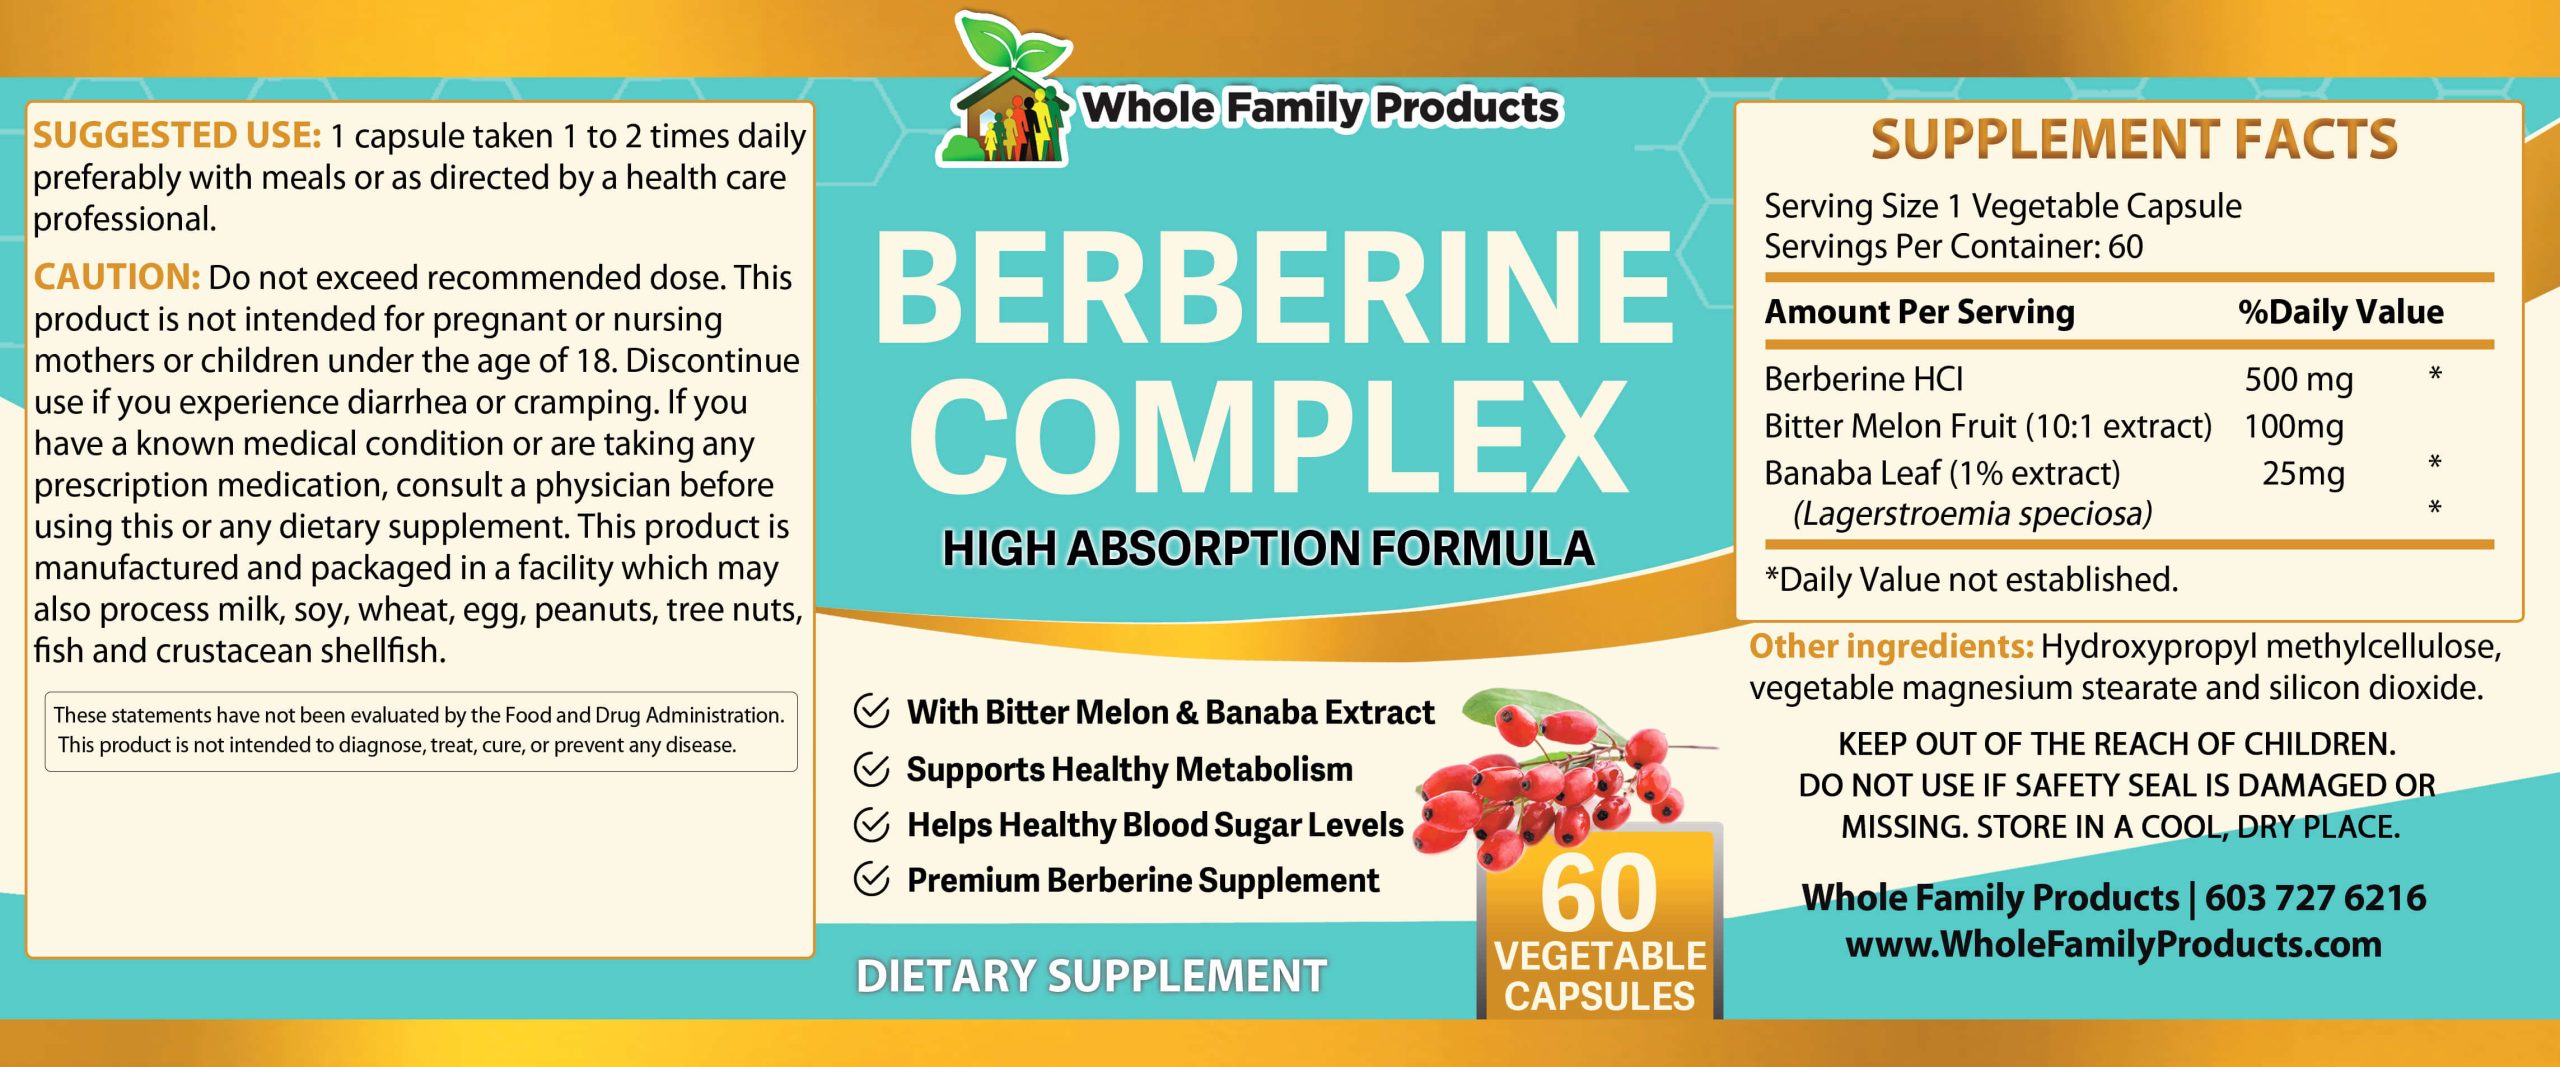 Berberine Complex Product Label